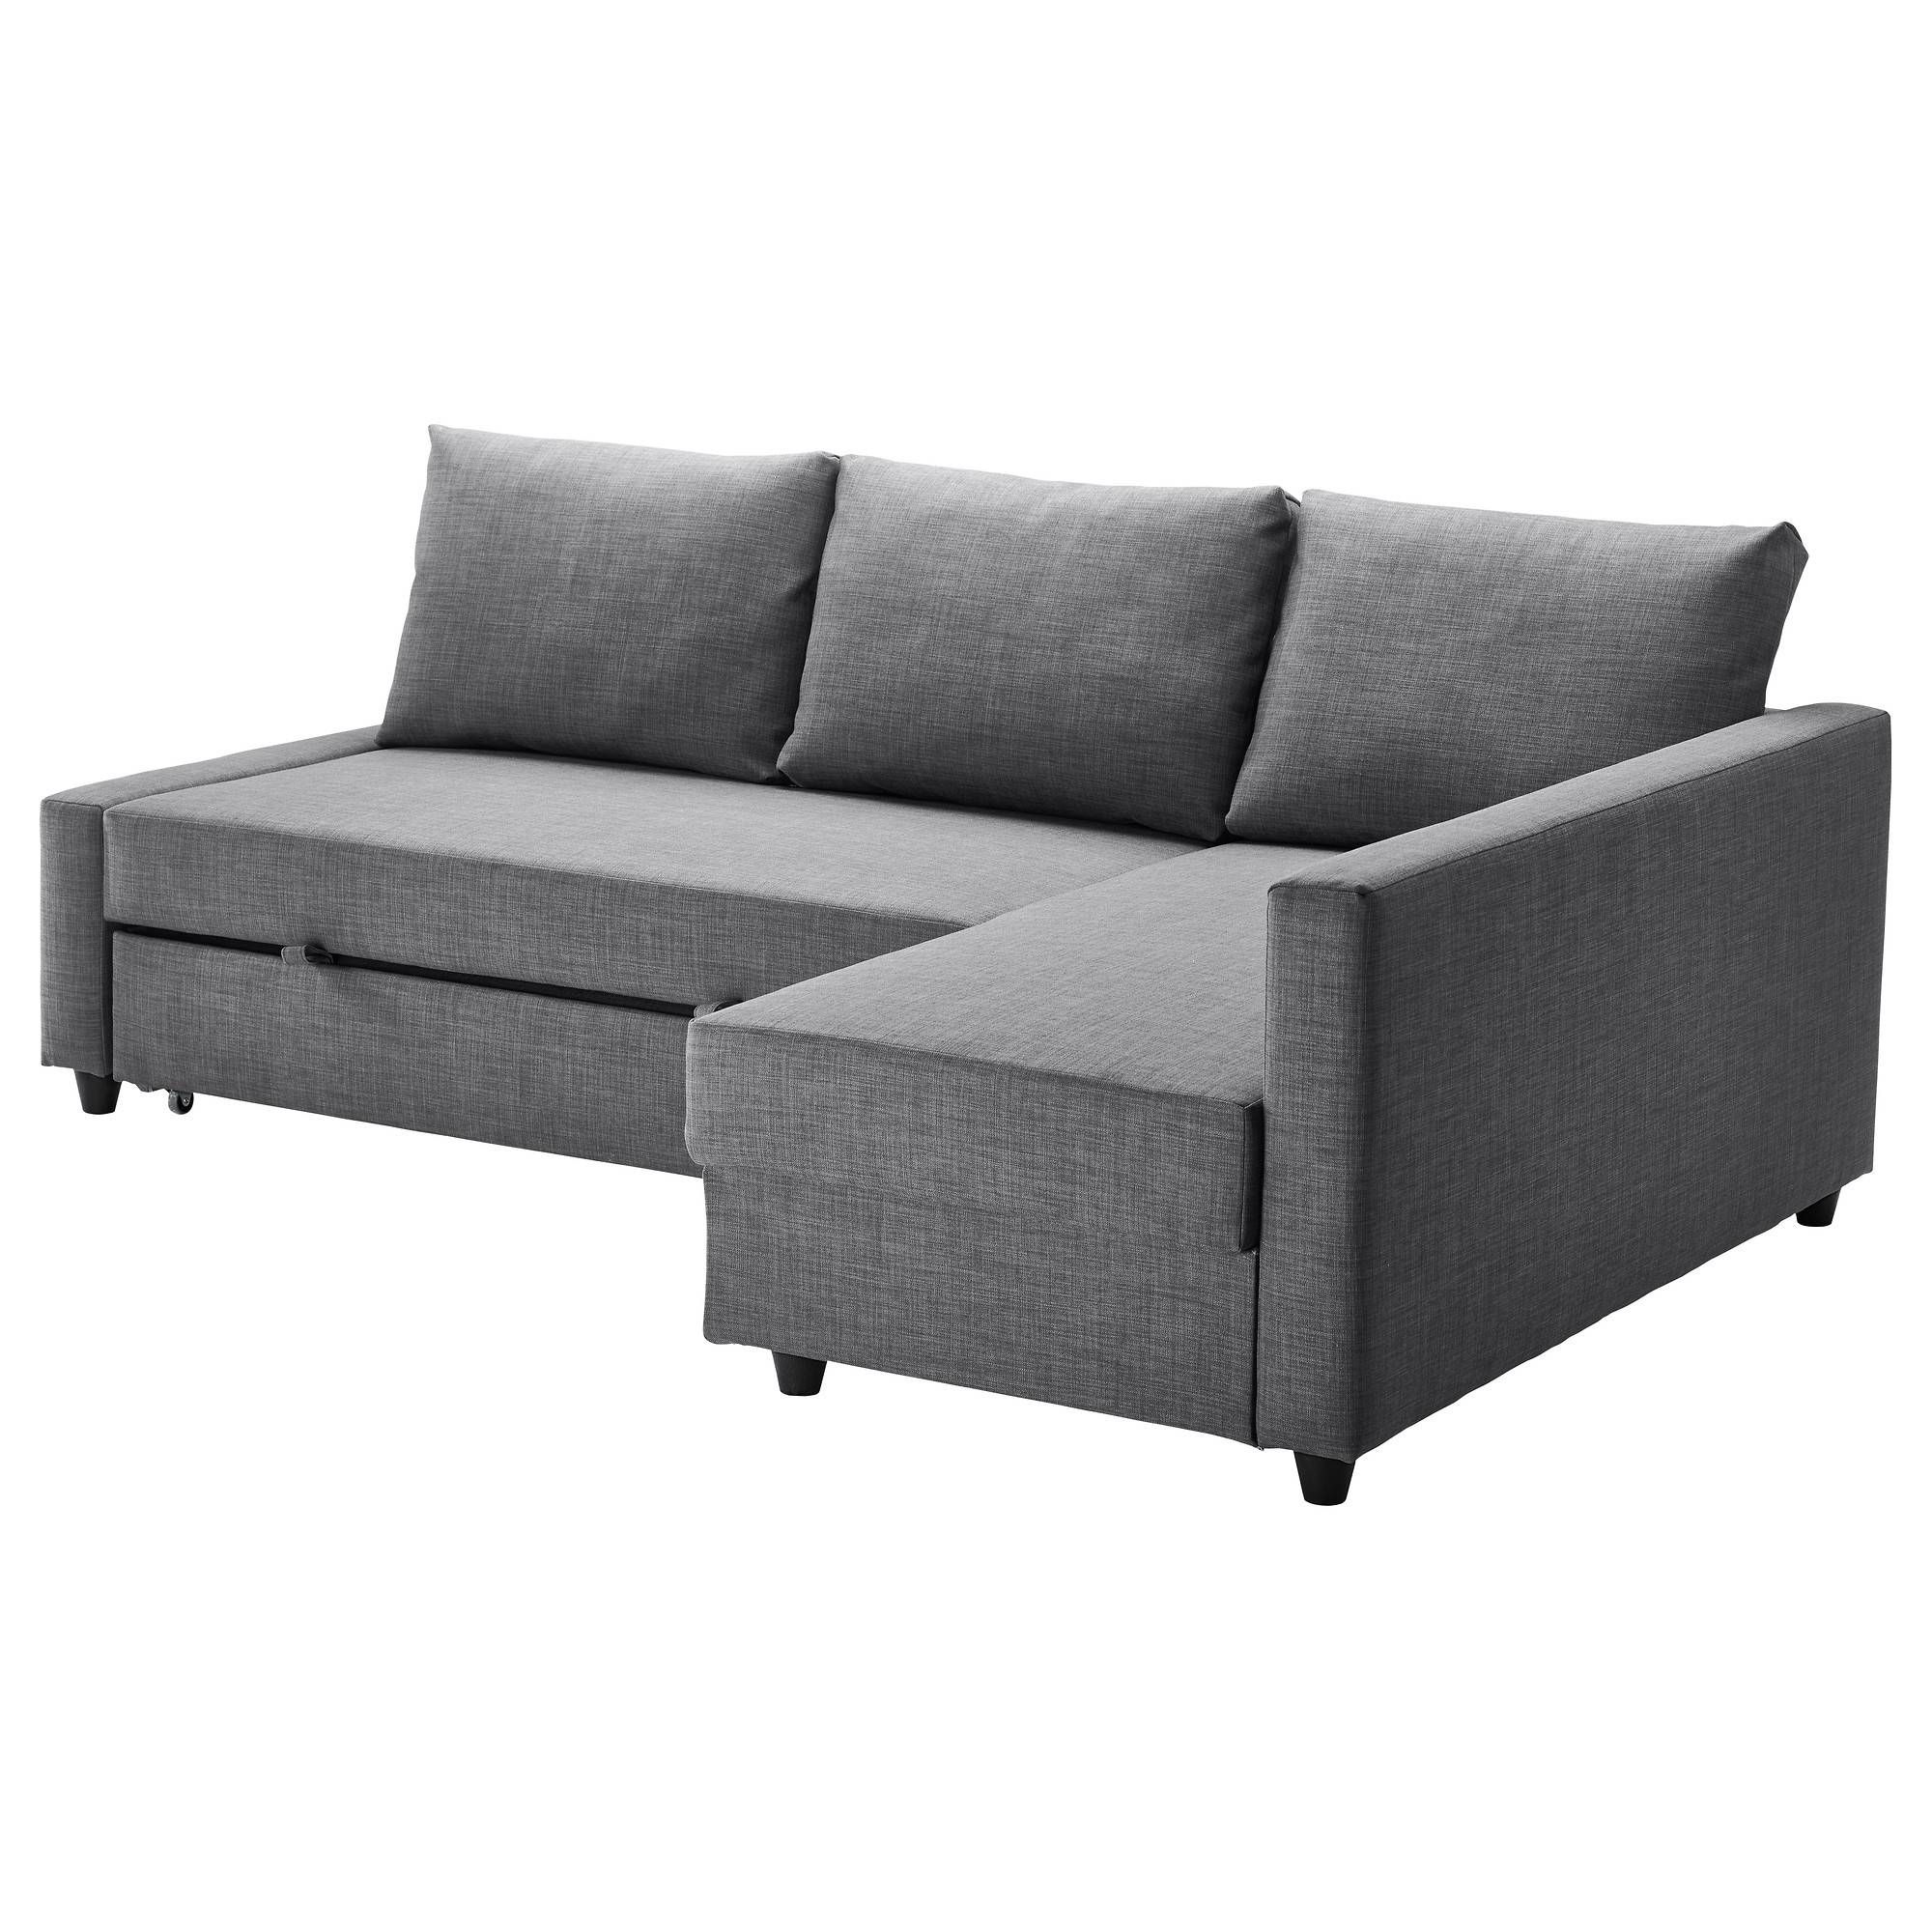 Friheten Corner Sofa Bed With Storage Skiftebo Dark Grey – Ikea Inside Sofa Chairs Ikea (View 13 of 30)